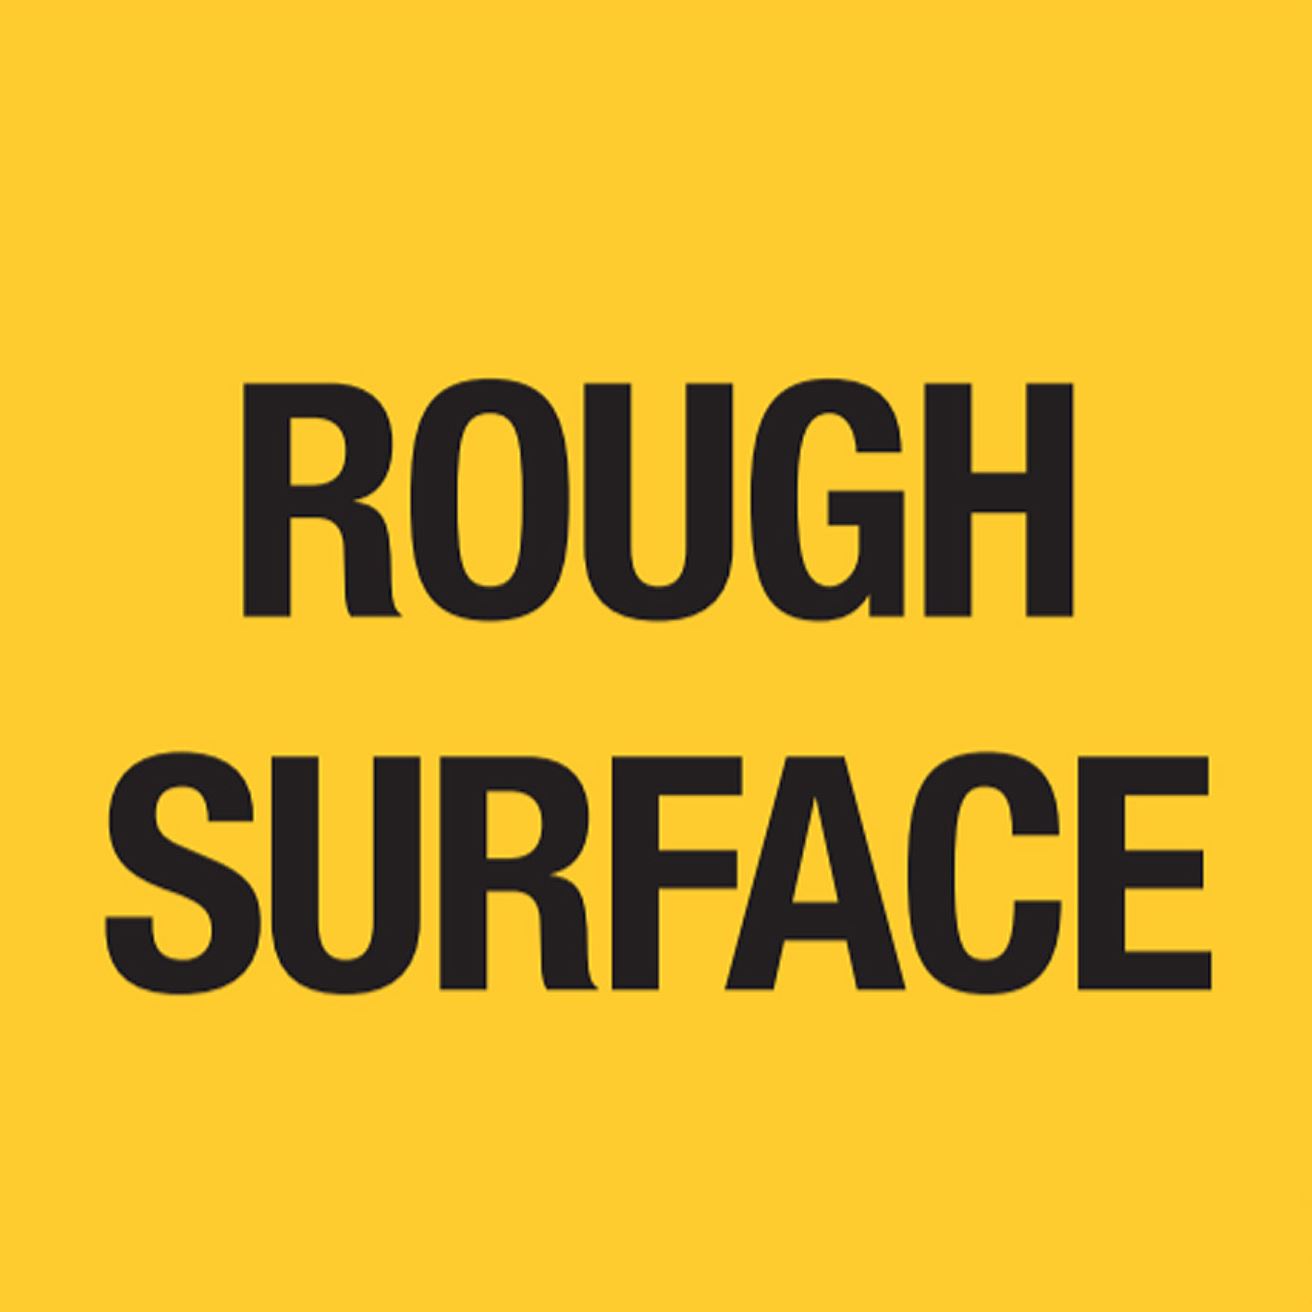 Rough Surface 600x600mm Multi-Message Sign Corflute, Class 1 Diamond Grade